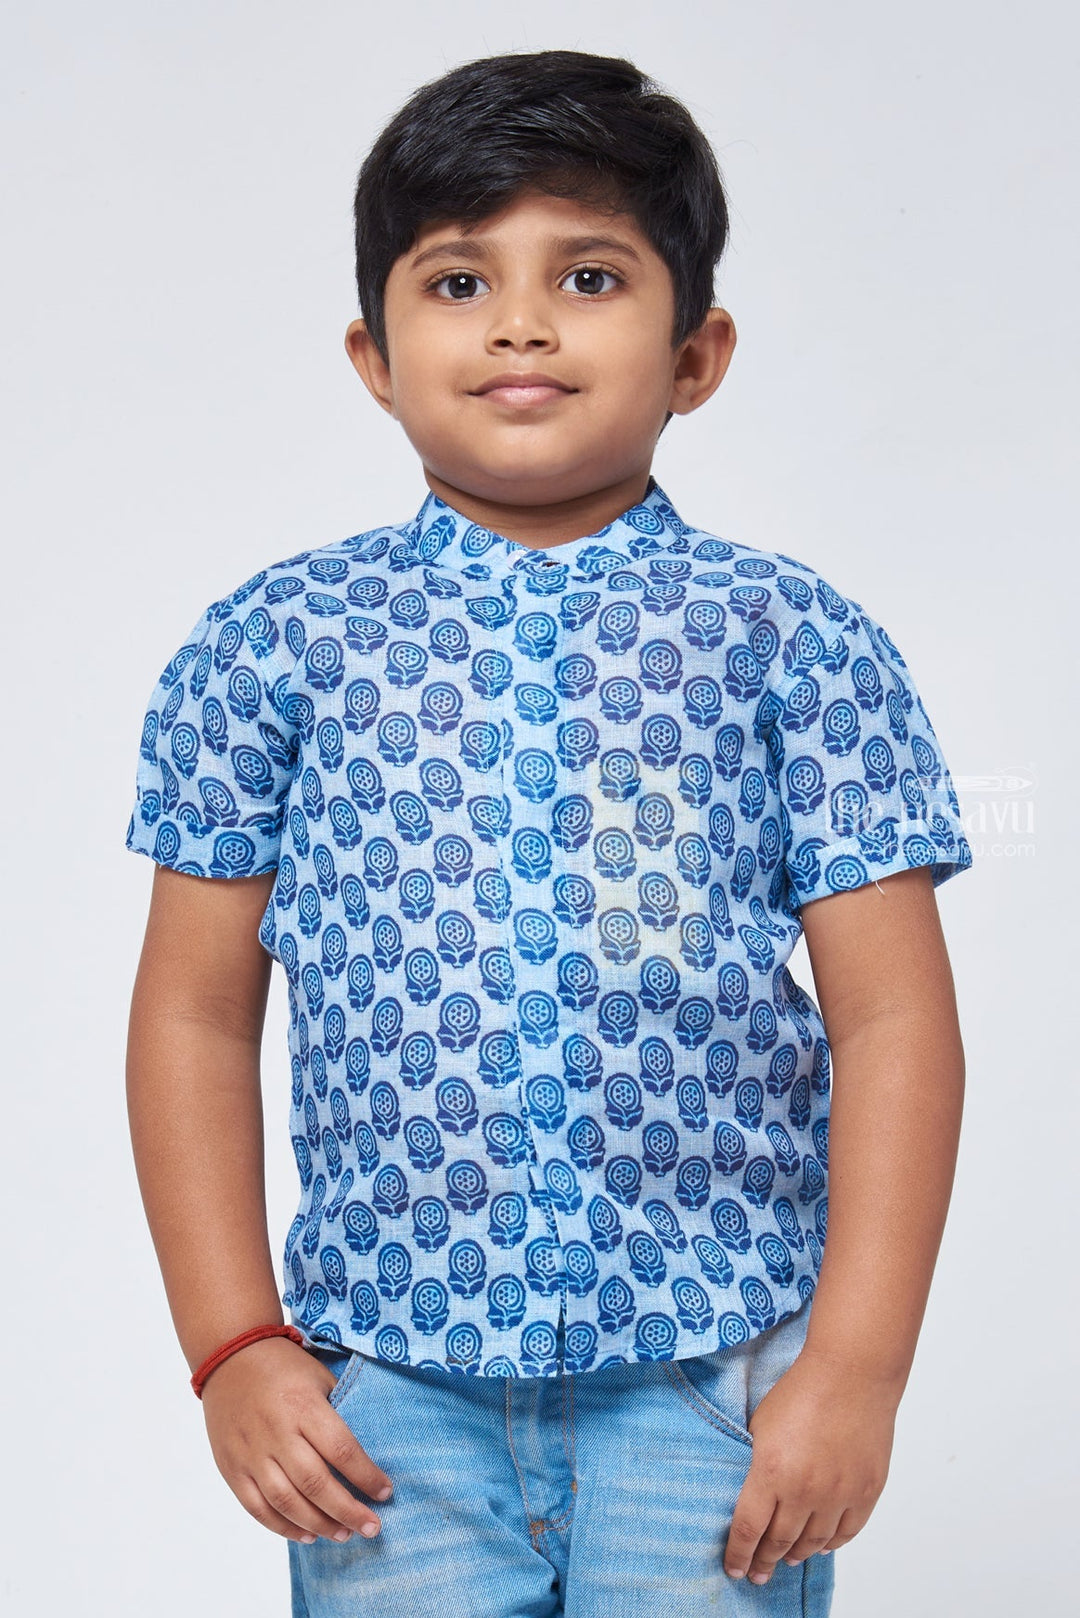 The Nesavu Boys Linen Shirt Tropical Indigo: Linen Boys' Shirt with Exotic Prints for a Vibrant Summer Look Nesavu 14 (6M) / Blue / Linen BS054-14 Linen Boys Shirt with Exotic Prints | Kids Premium Shirt | The Nesavu